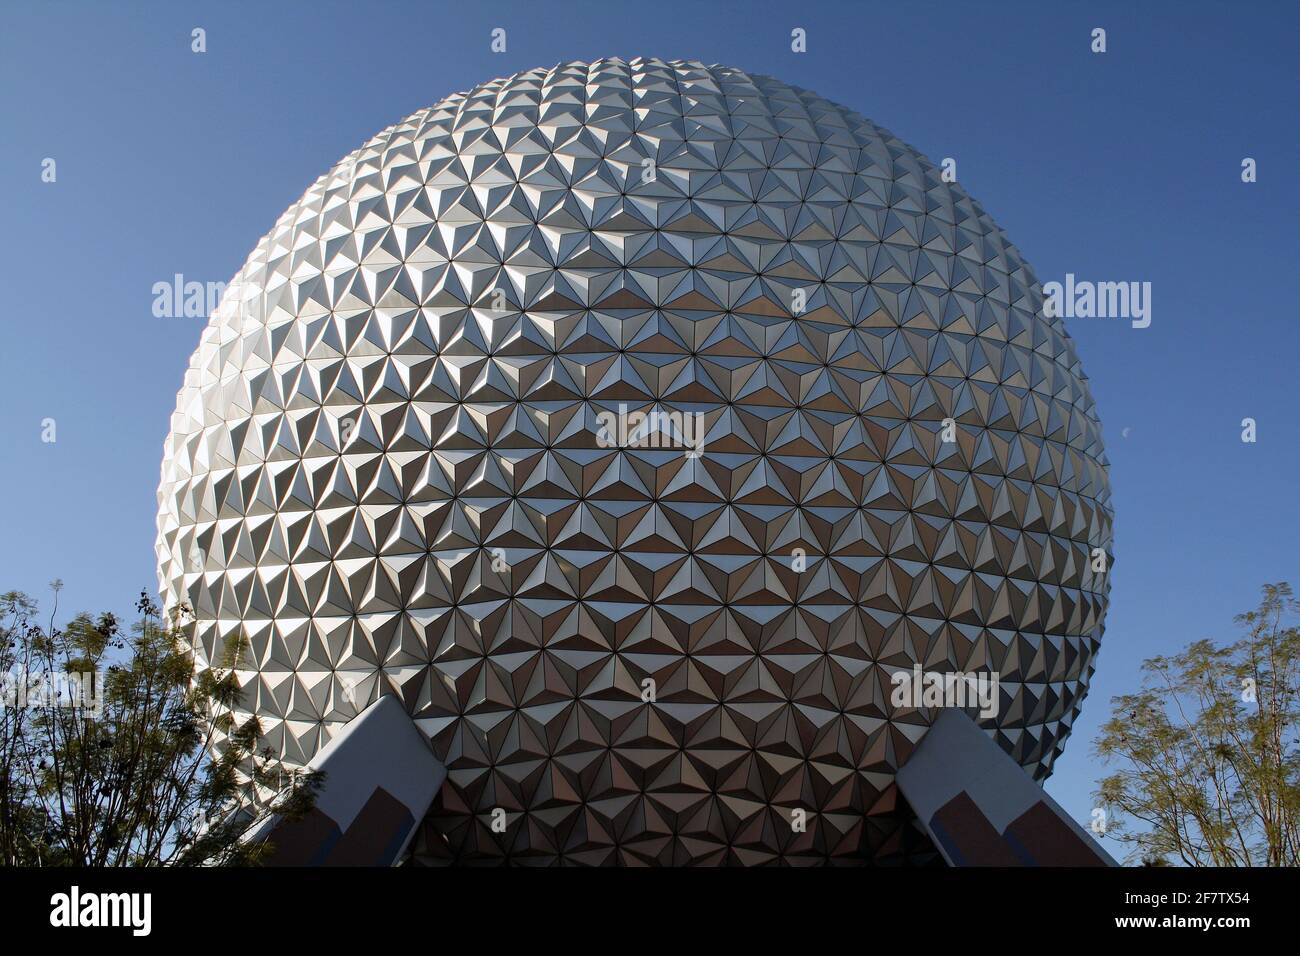 Epcot at Disneyworld in Florida, U.S. Stock Photo